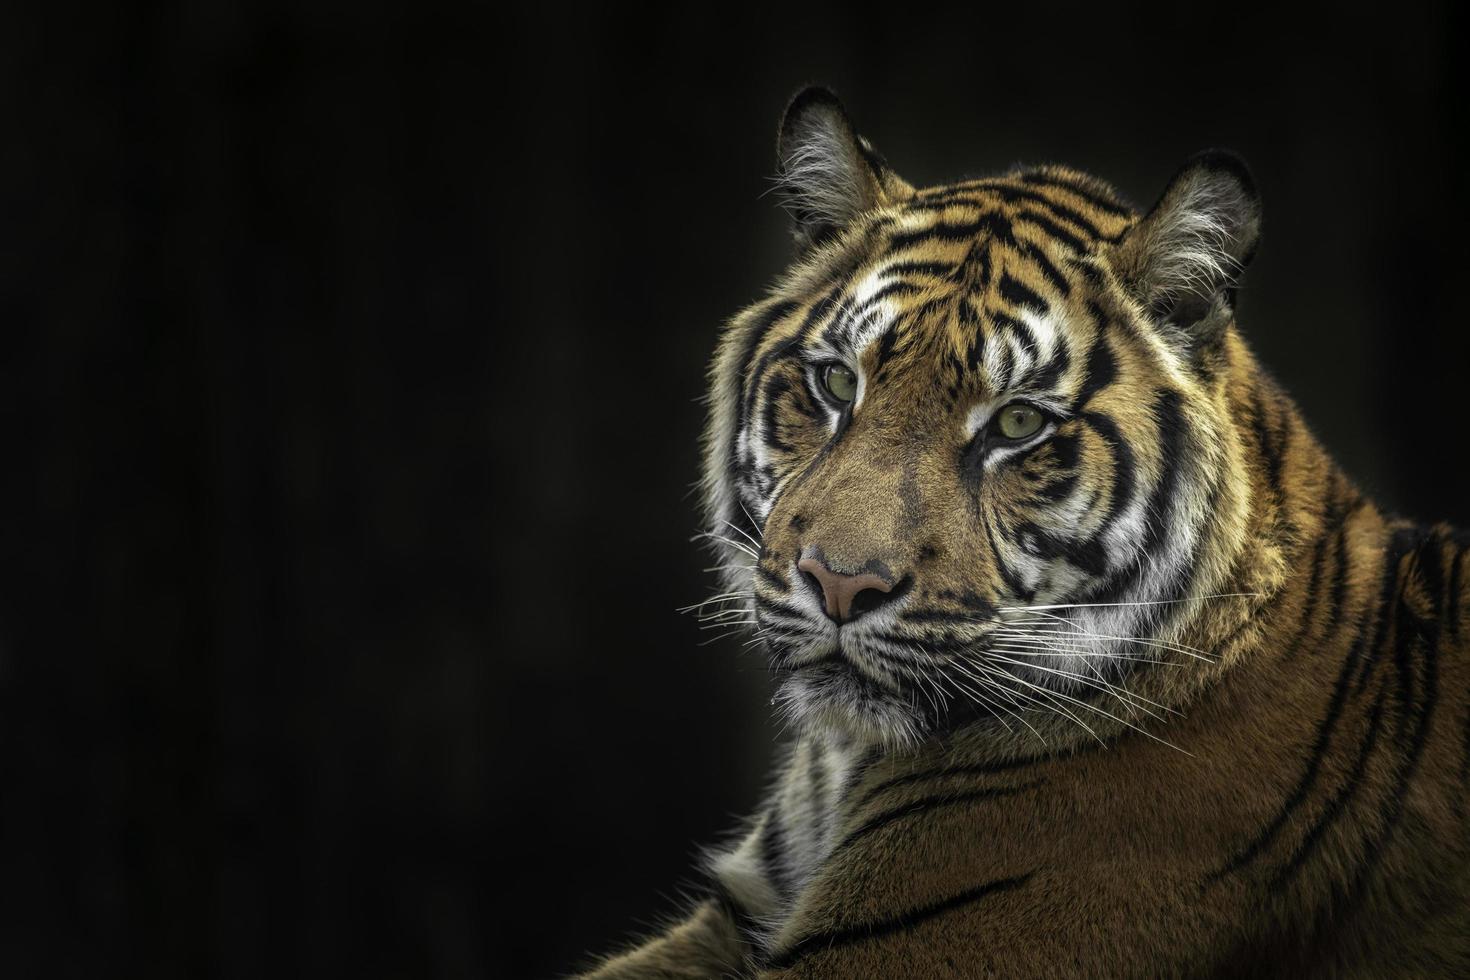 retrato de tigre sumatra foto